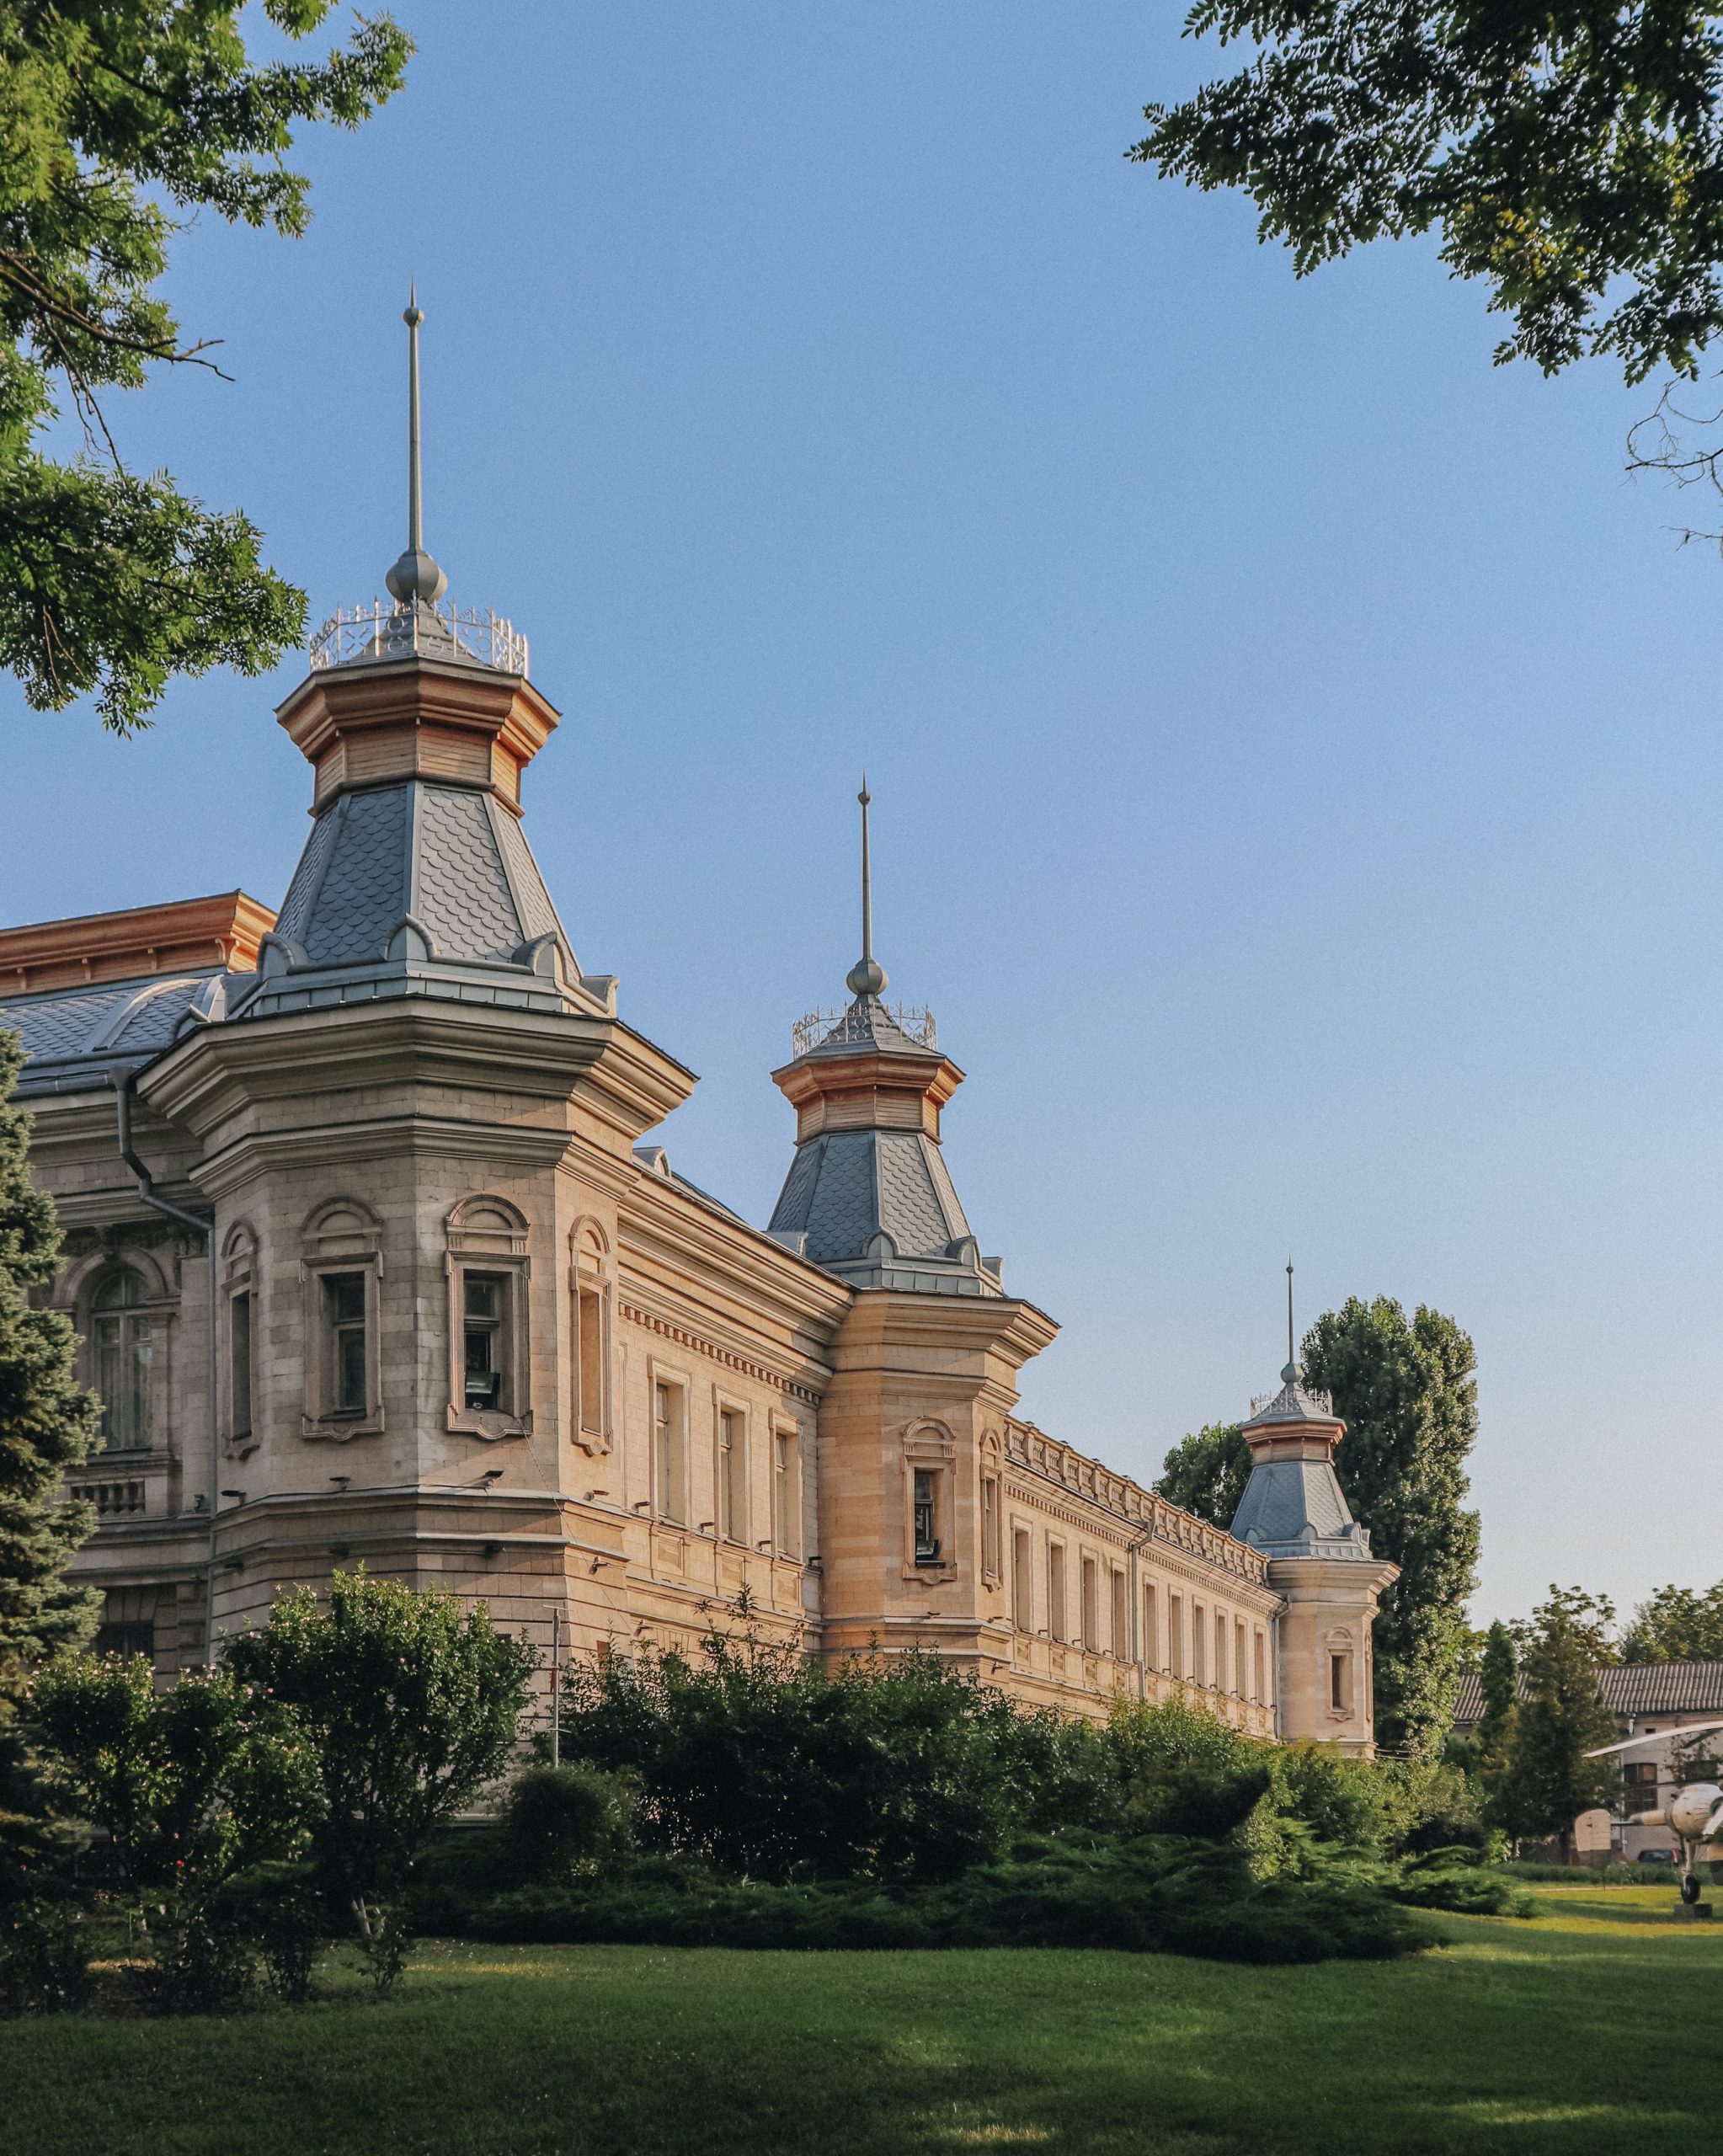 The National History Museum Chisinau